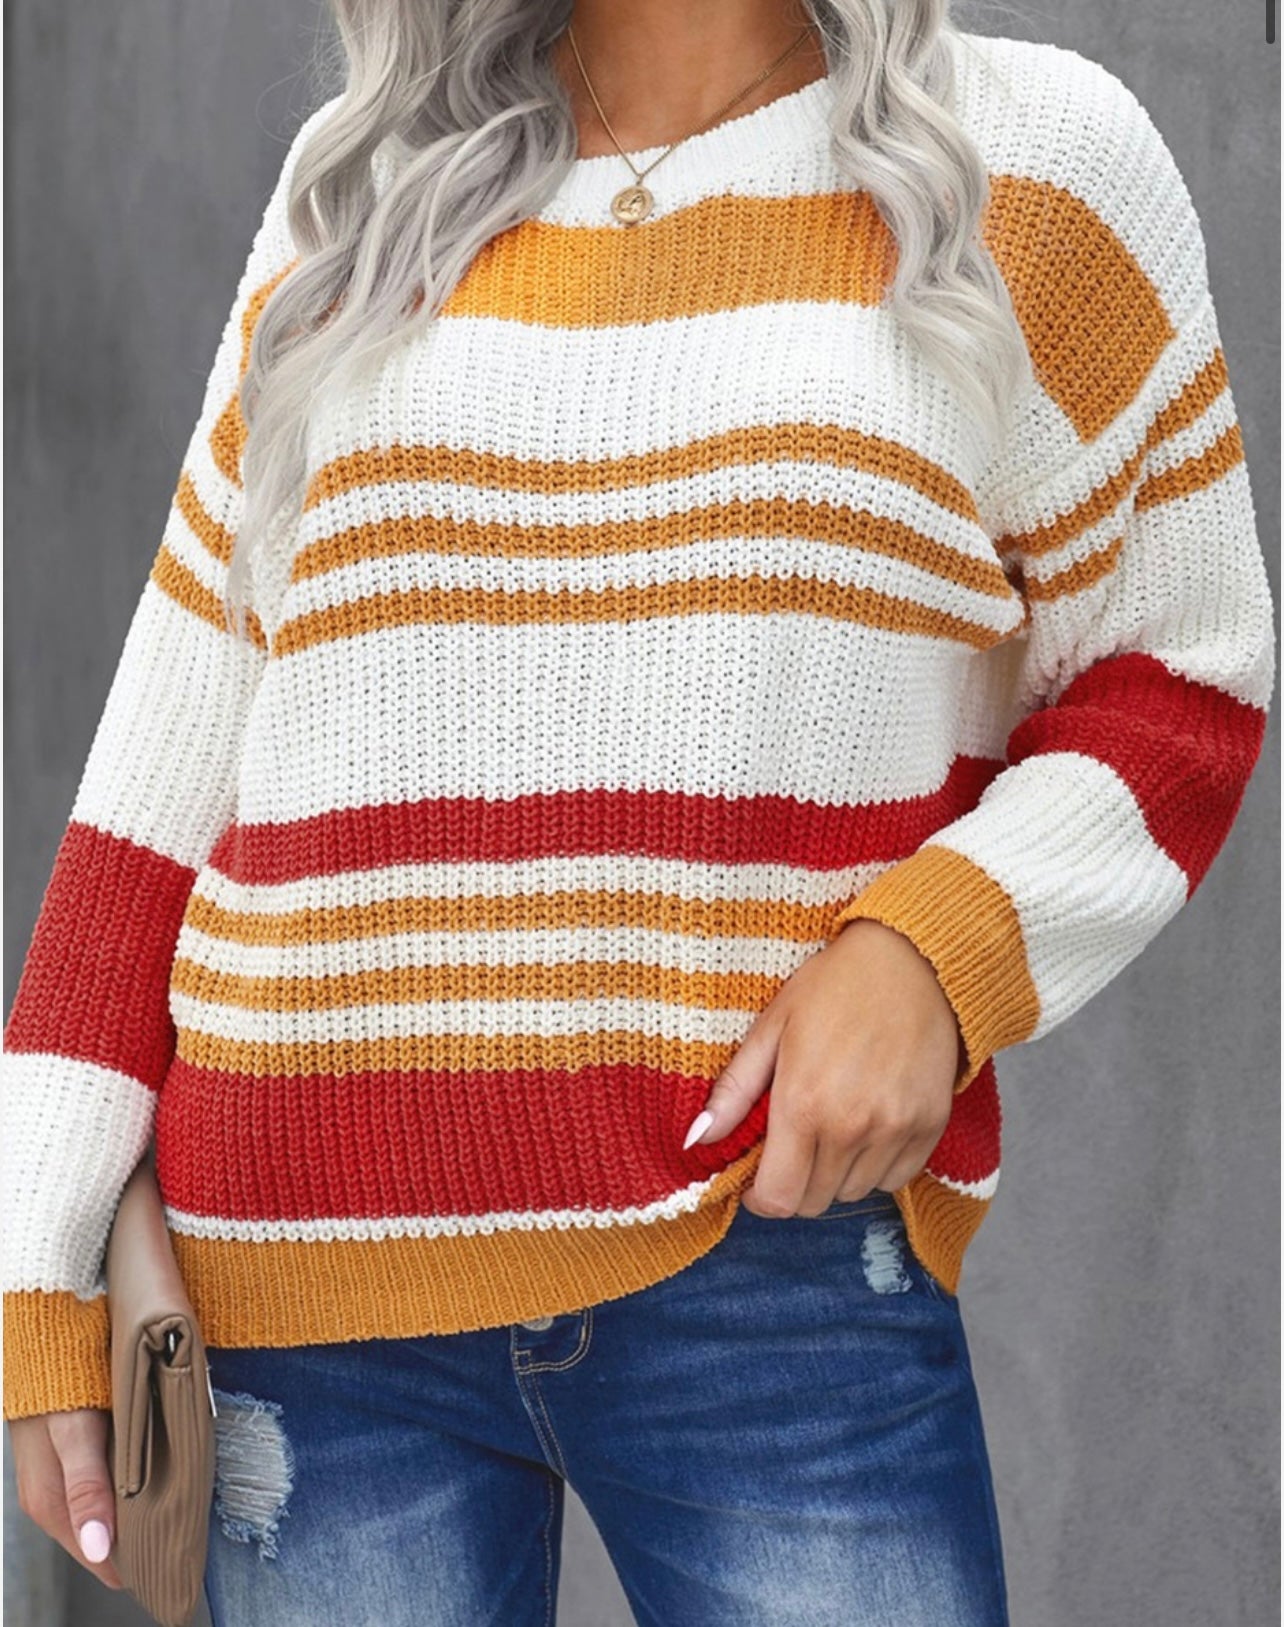 Beautiful Striped Sweater Regular & Plus